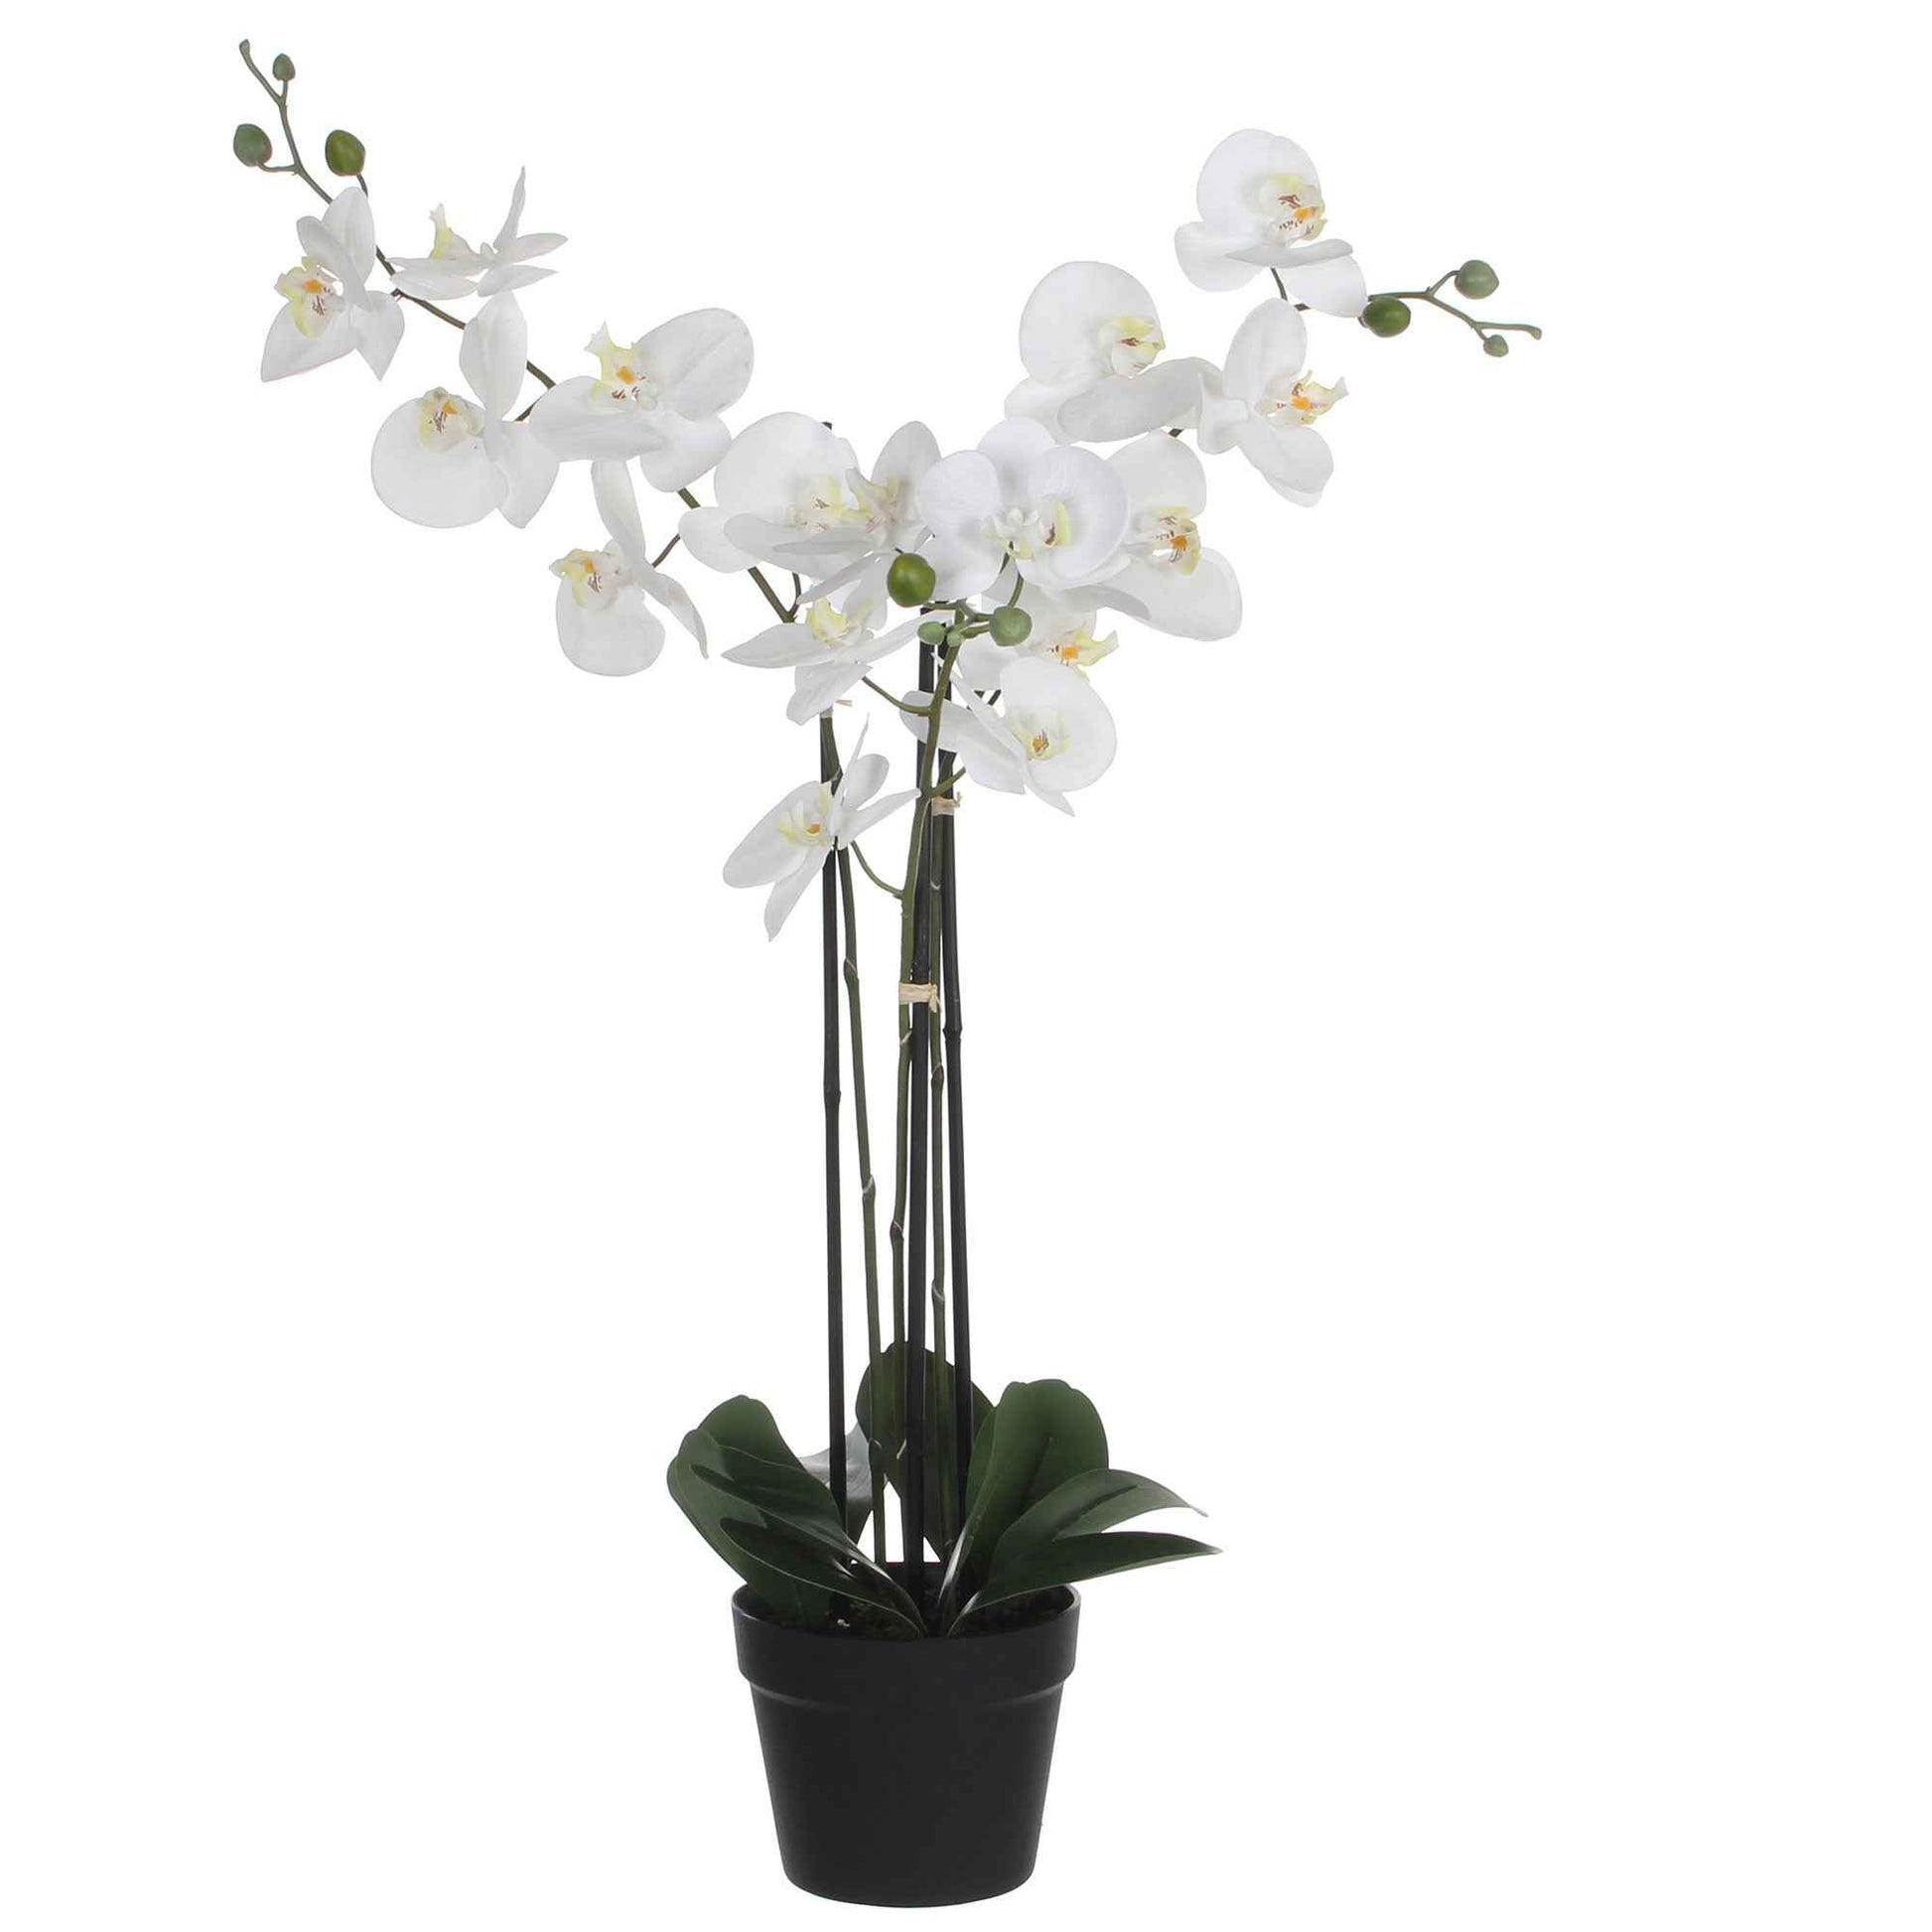 Kunstplant Orchidee Phalaenopsis wit Incl. sierpot rond kunststof - Alle kunstplanten